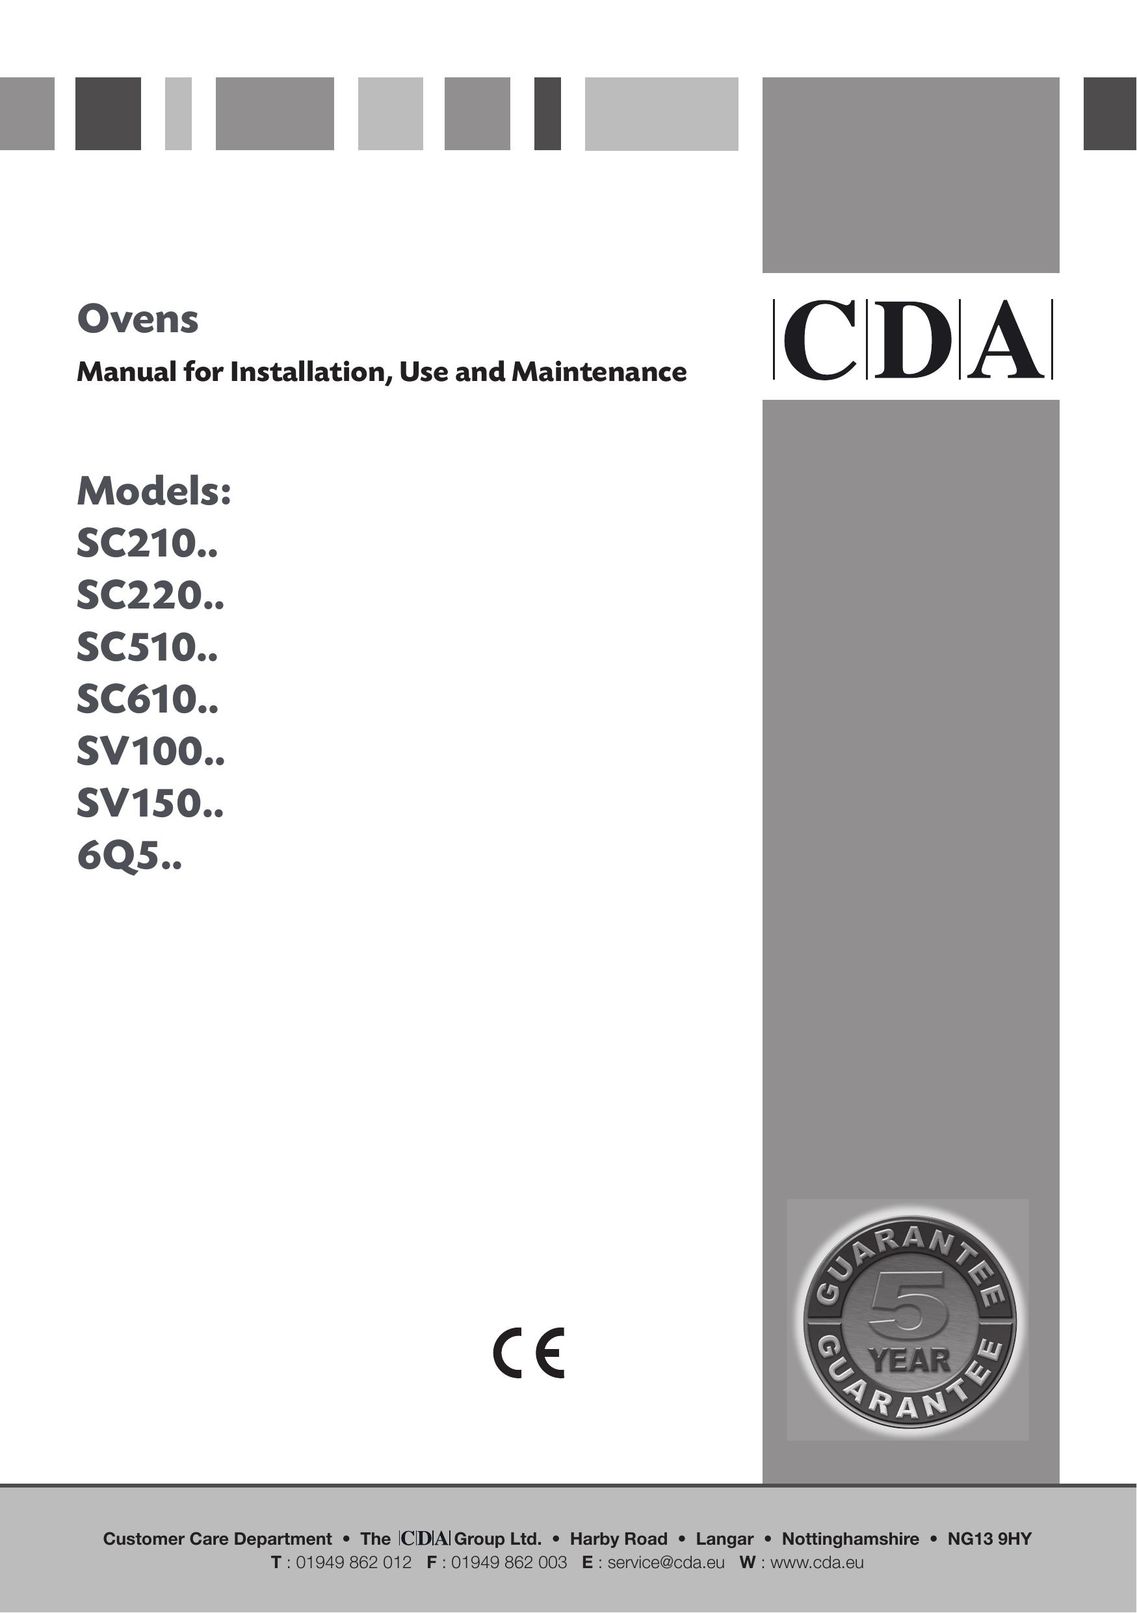 CDA SV150 Oven User Manual